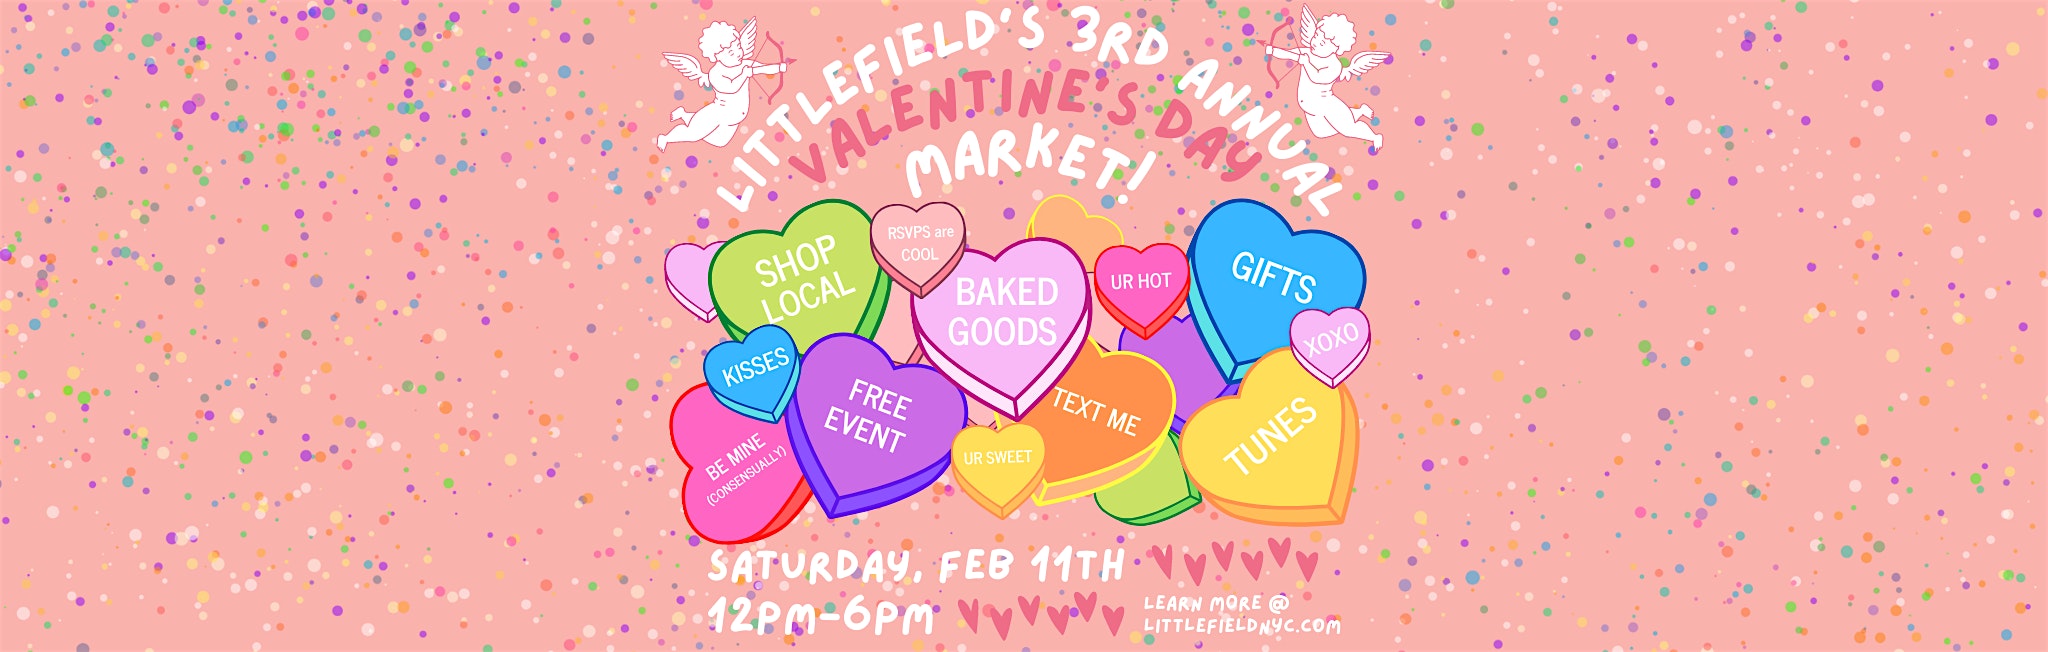 littlefield’s 3rd Annual Valentine’s Day Market!